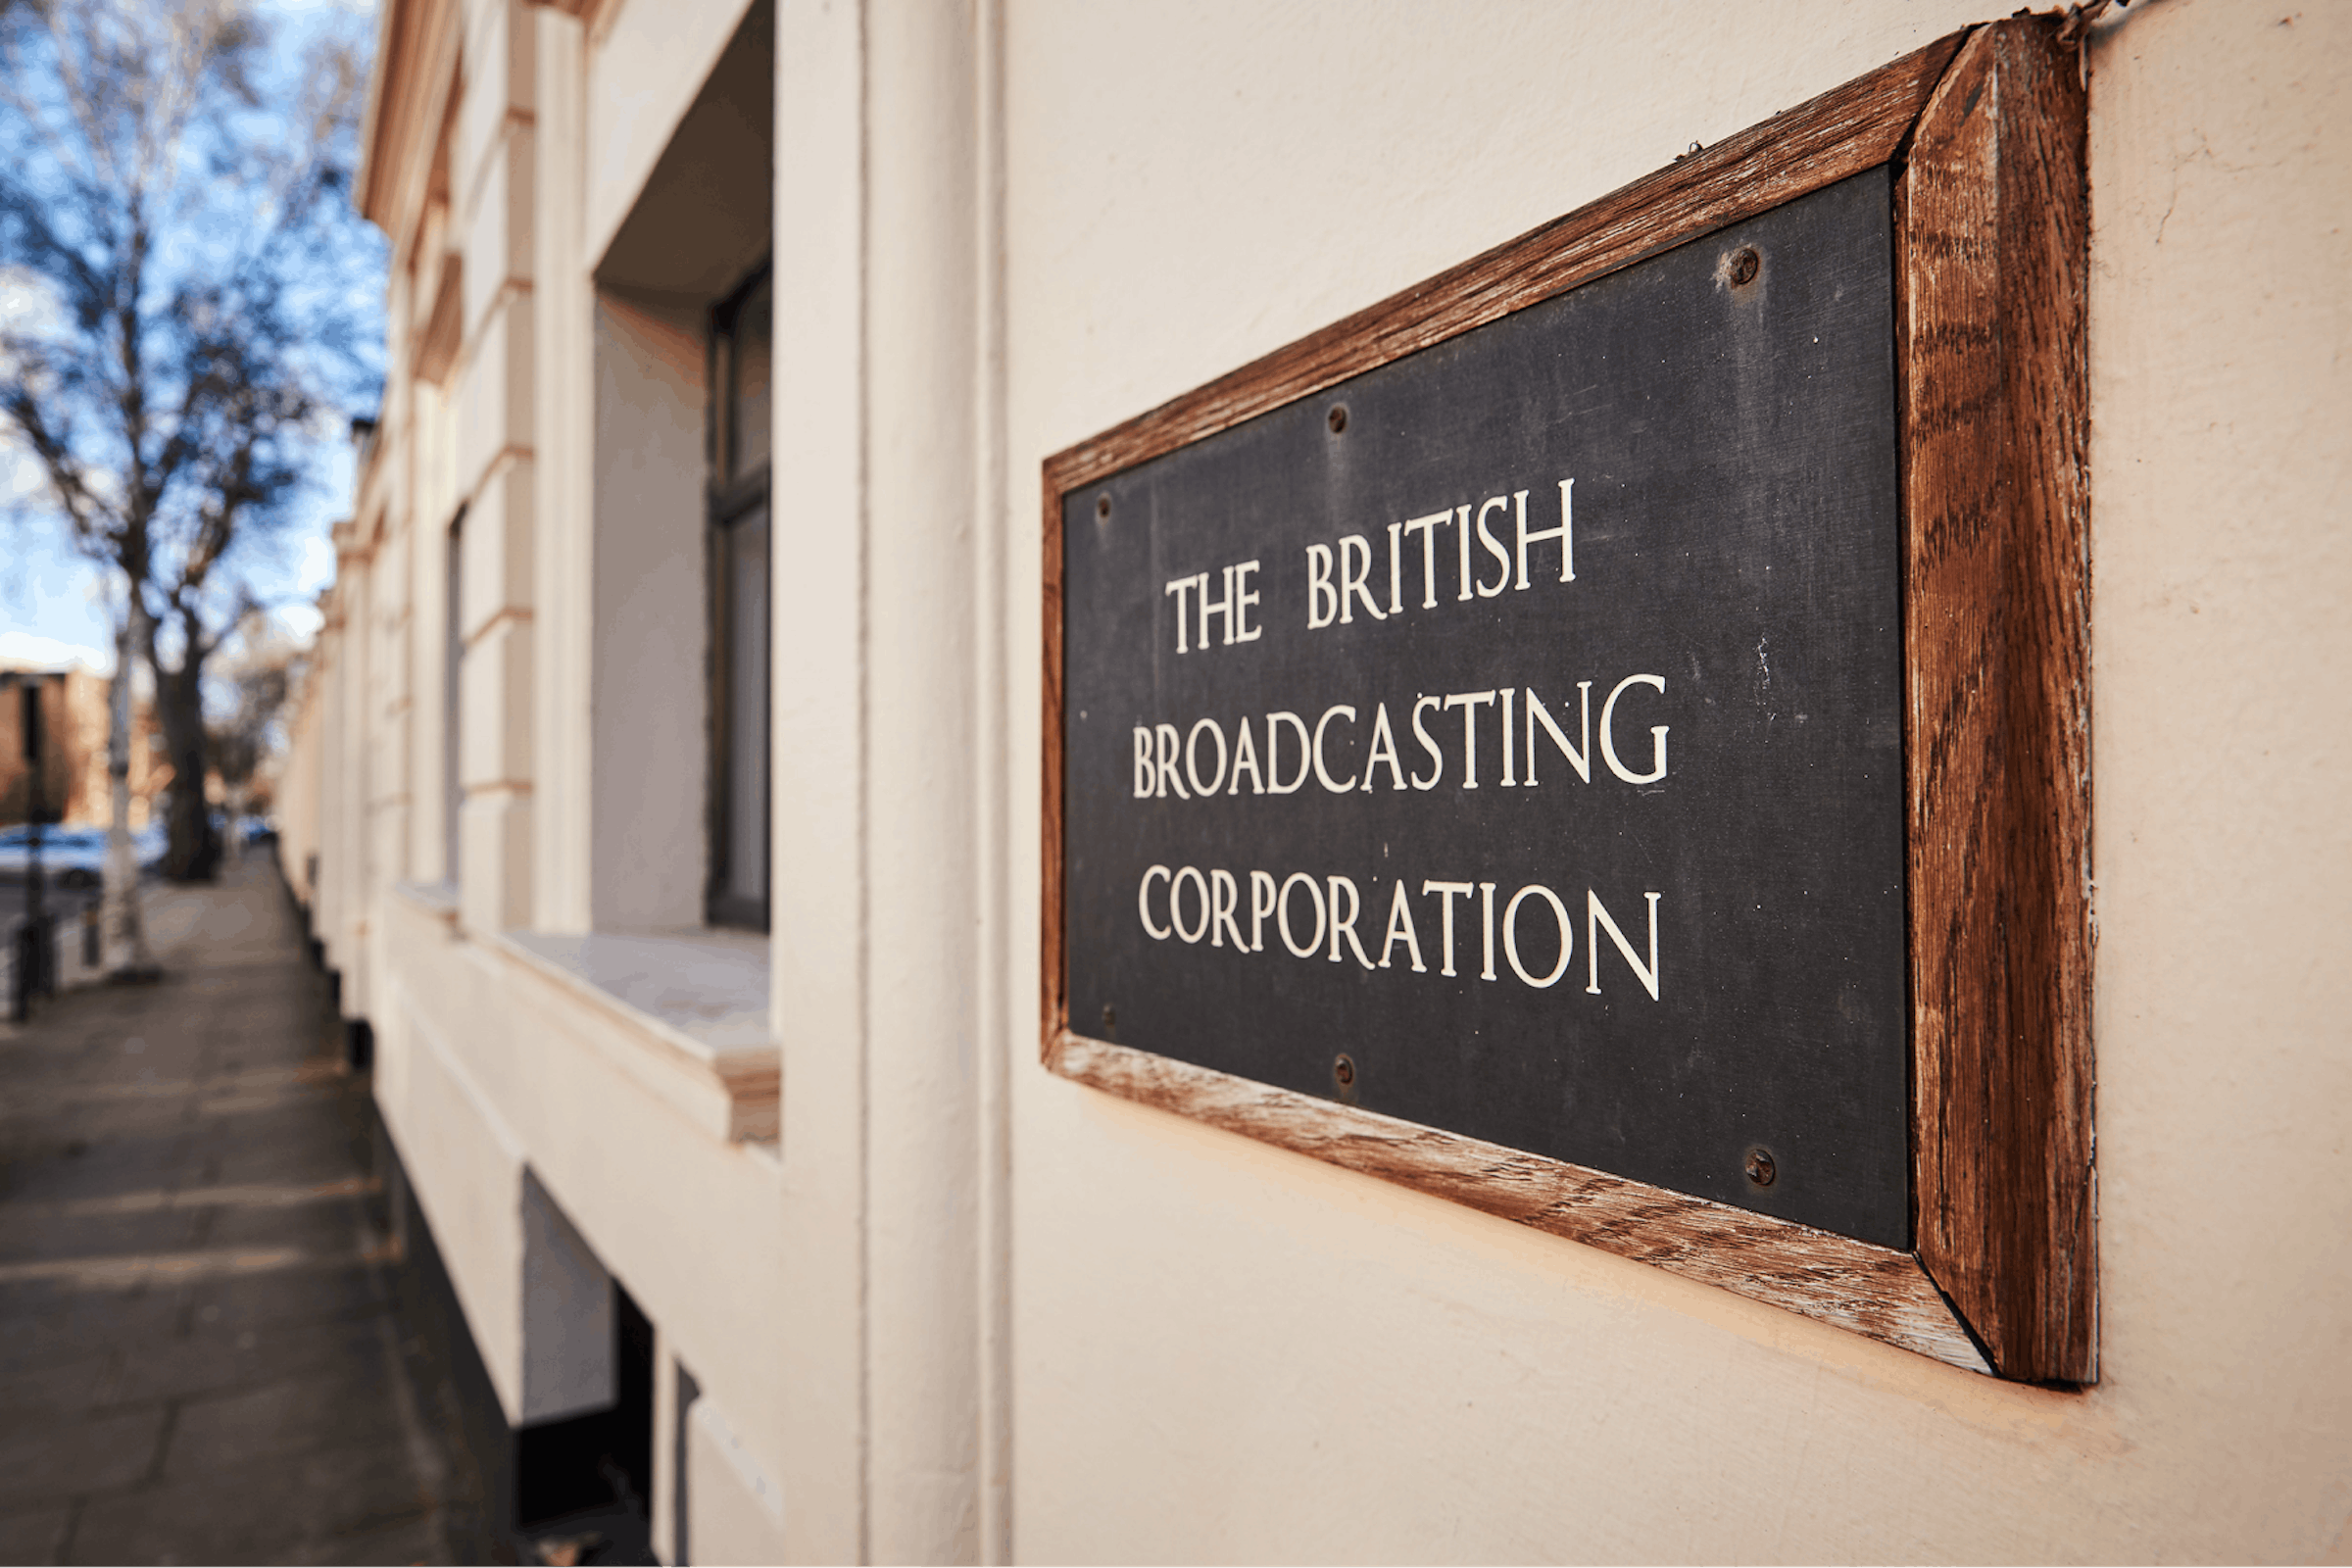 Maida Vale Studios sign: "The British Broadcasting Corporation"